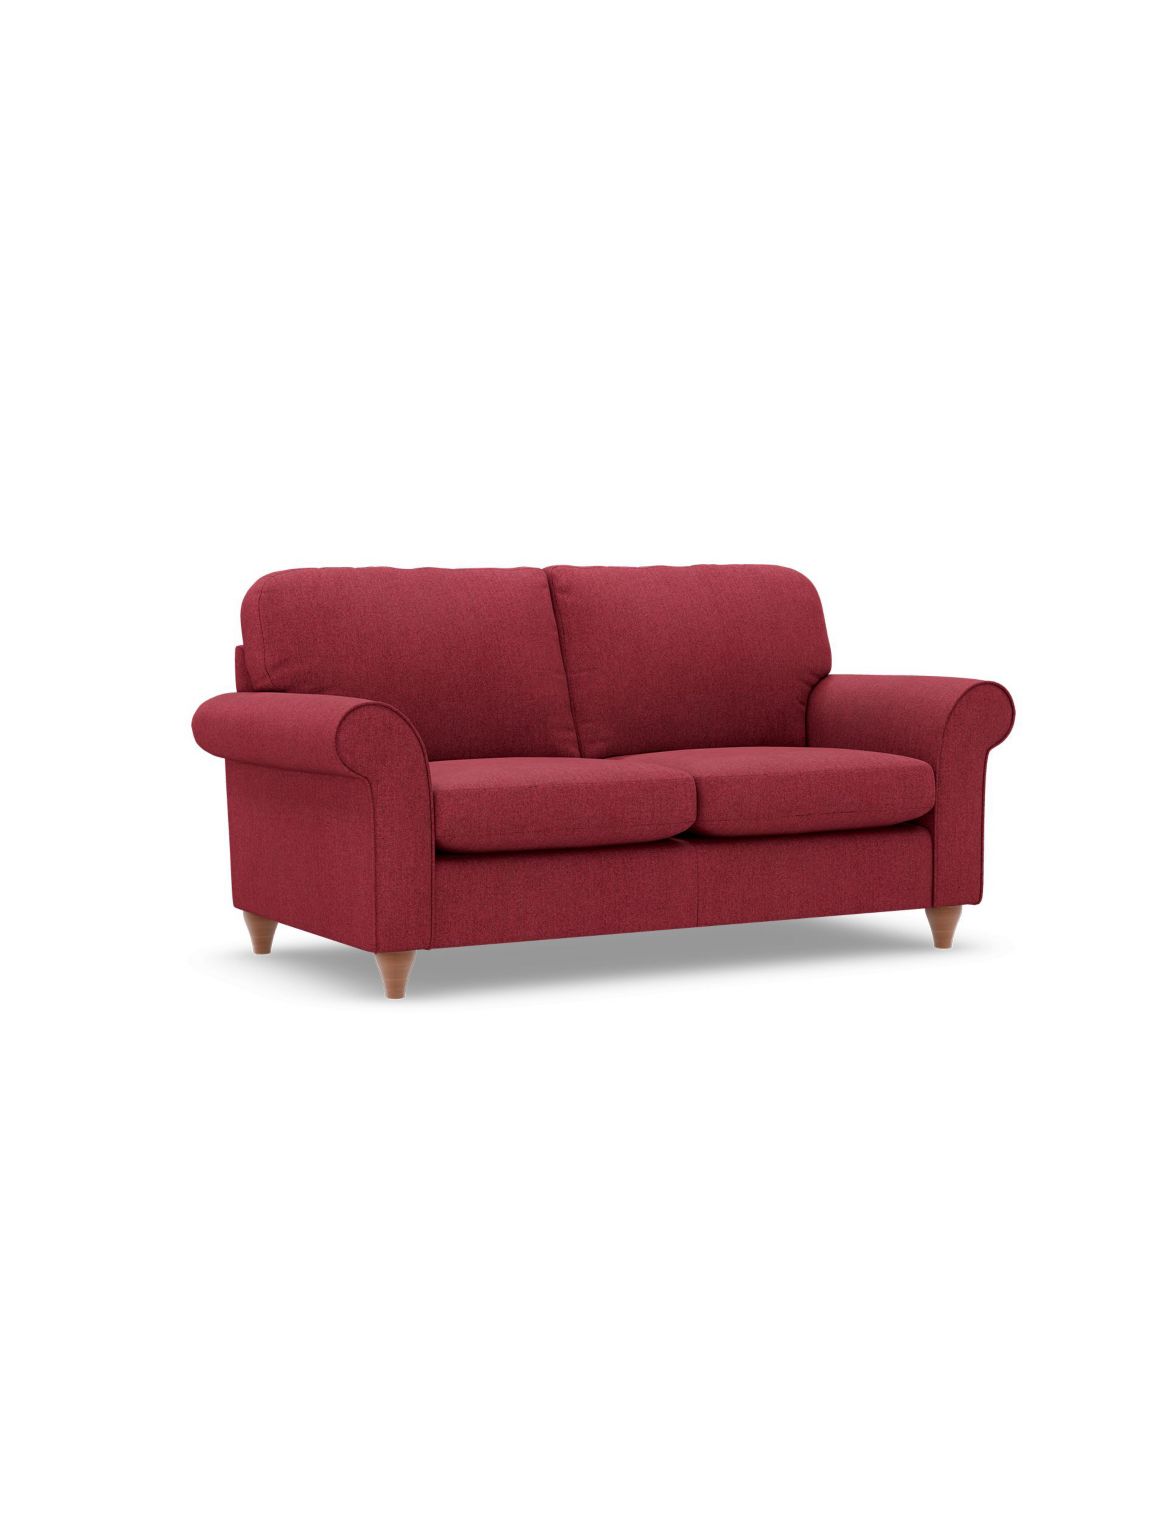 Olivia Small Sofa red